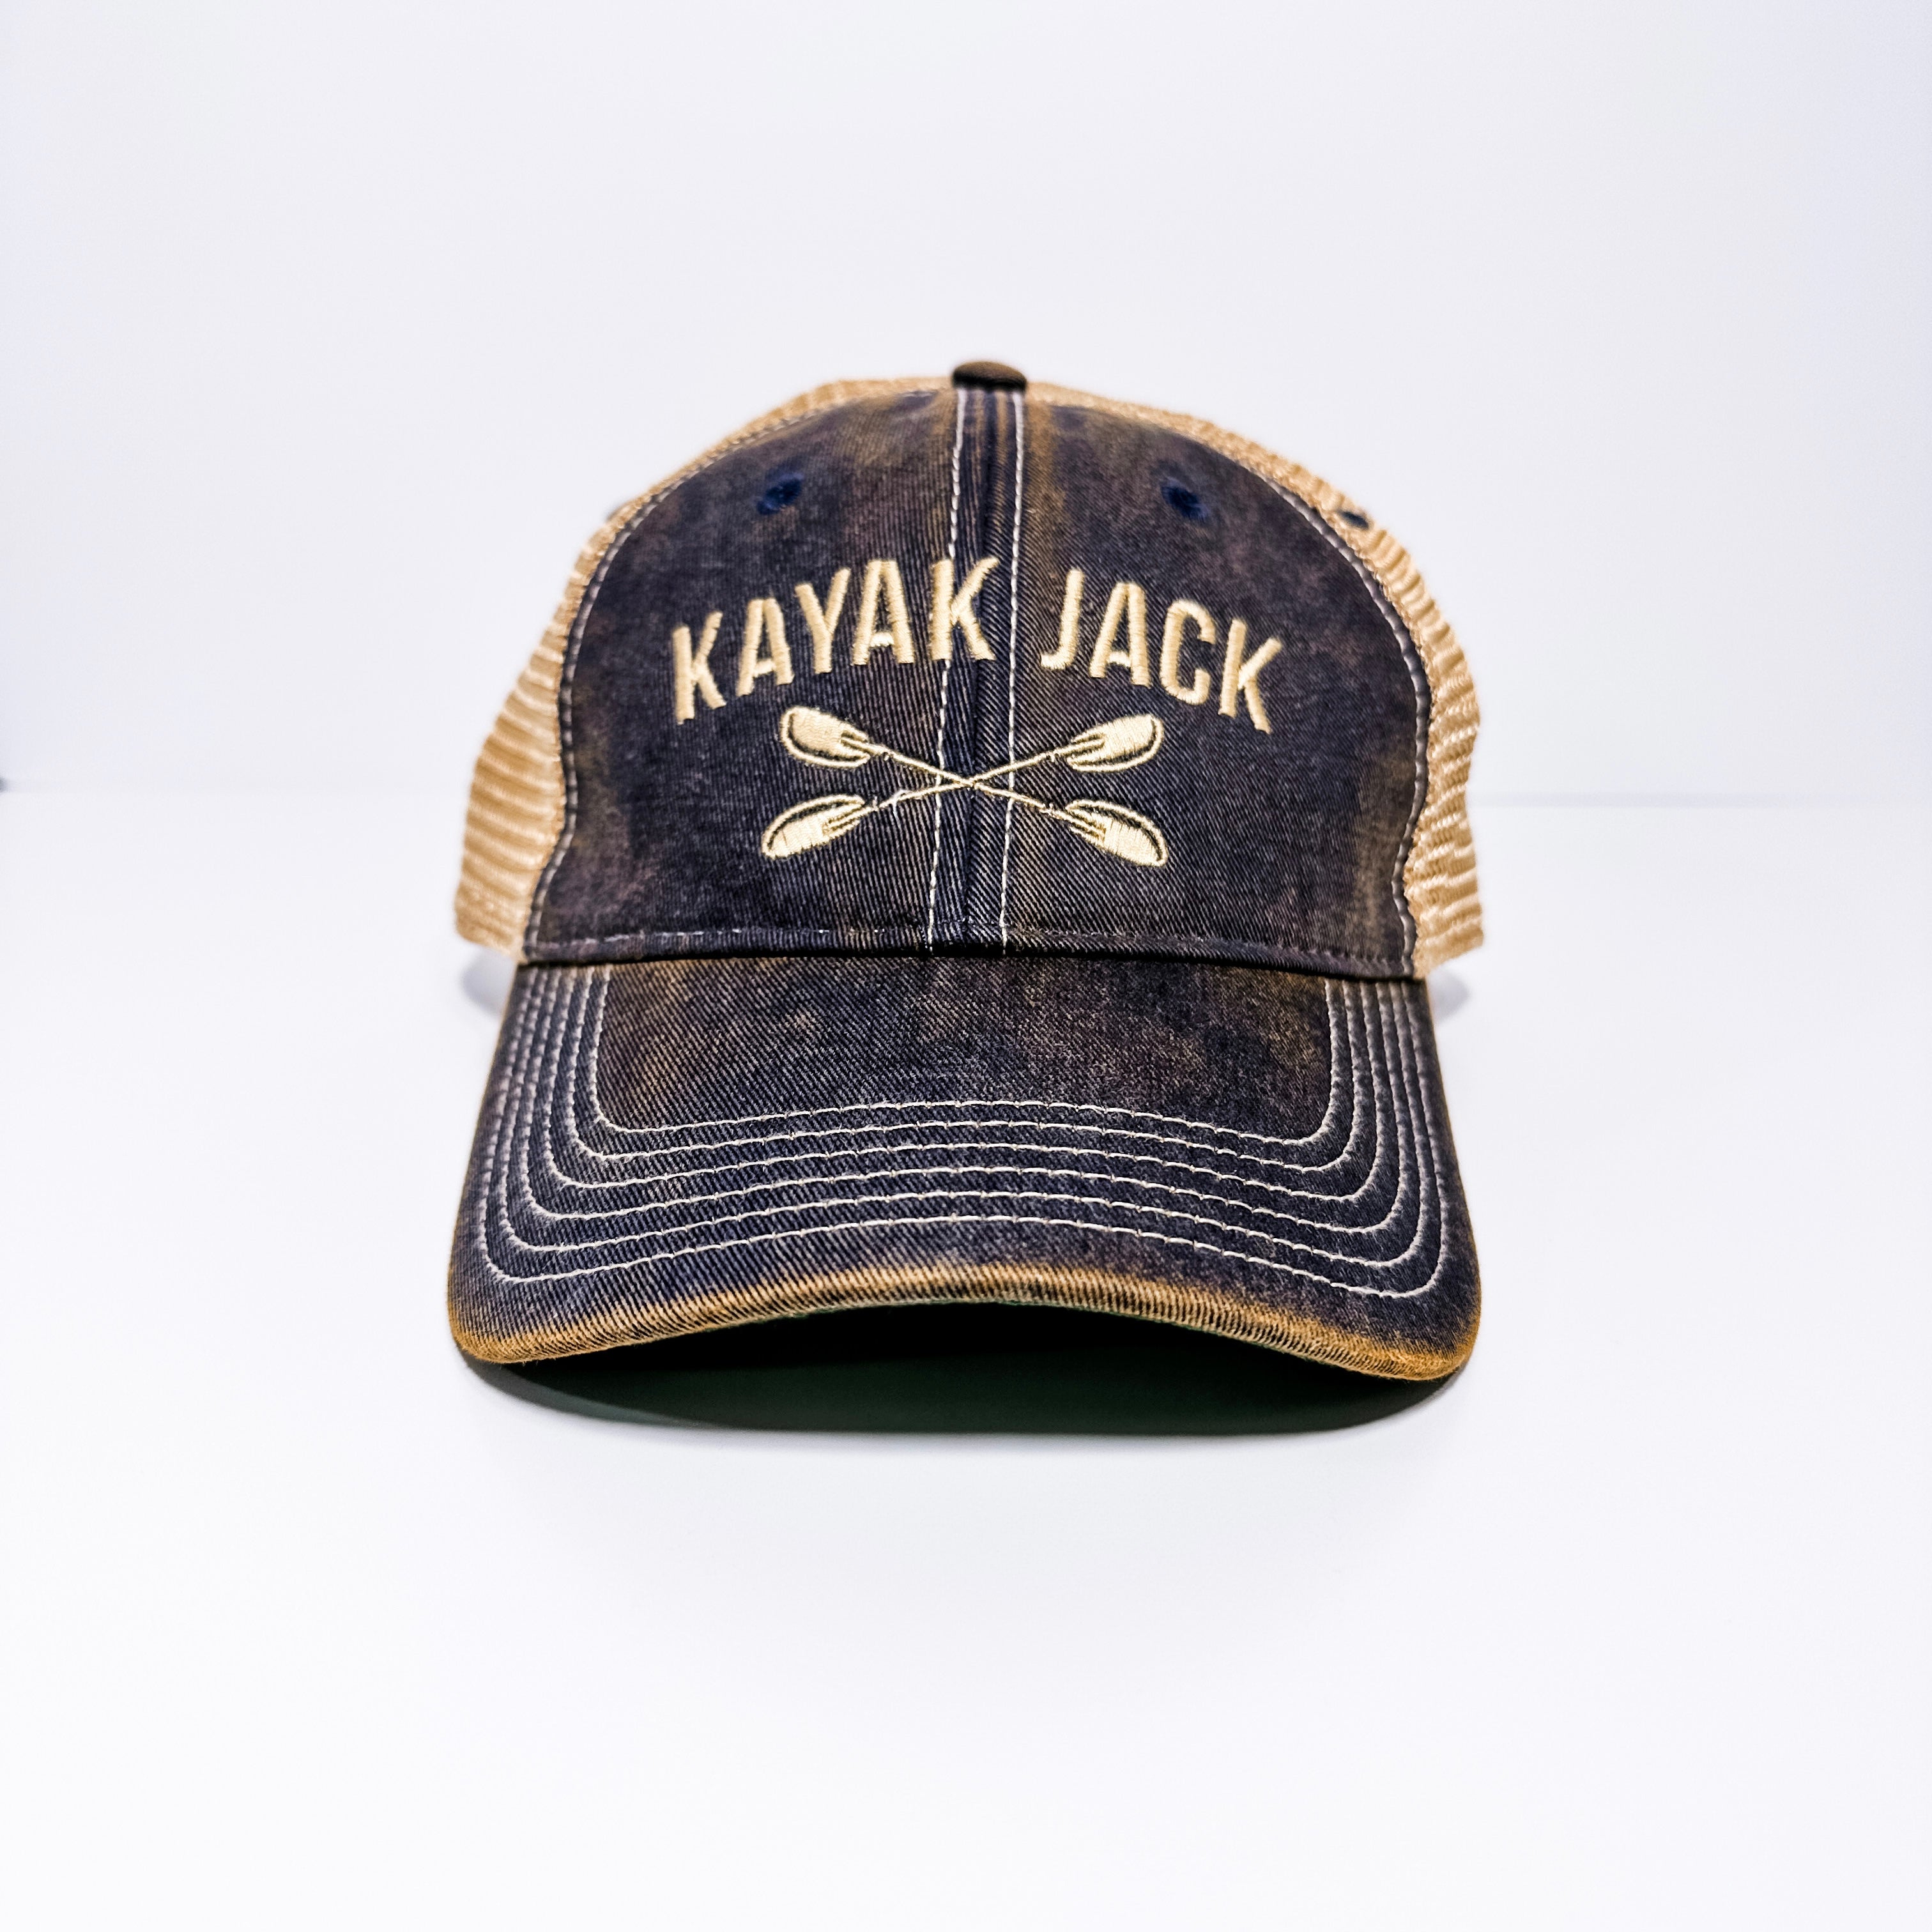 Navy Blue Old Favorite Trucker Cap Hat for Kayakers - Kayak Jack